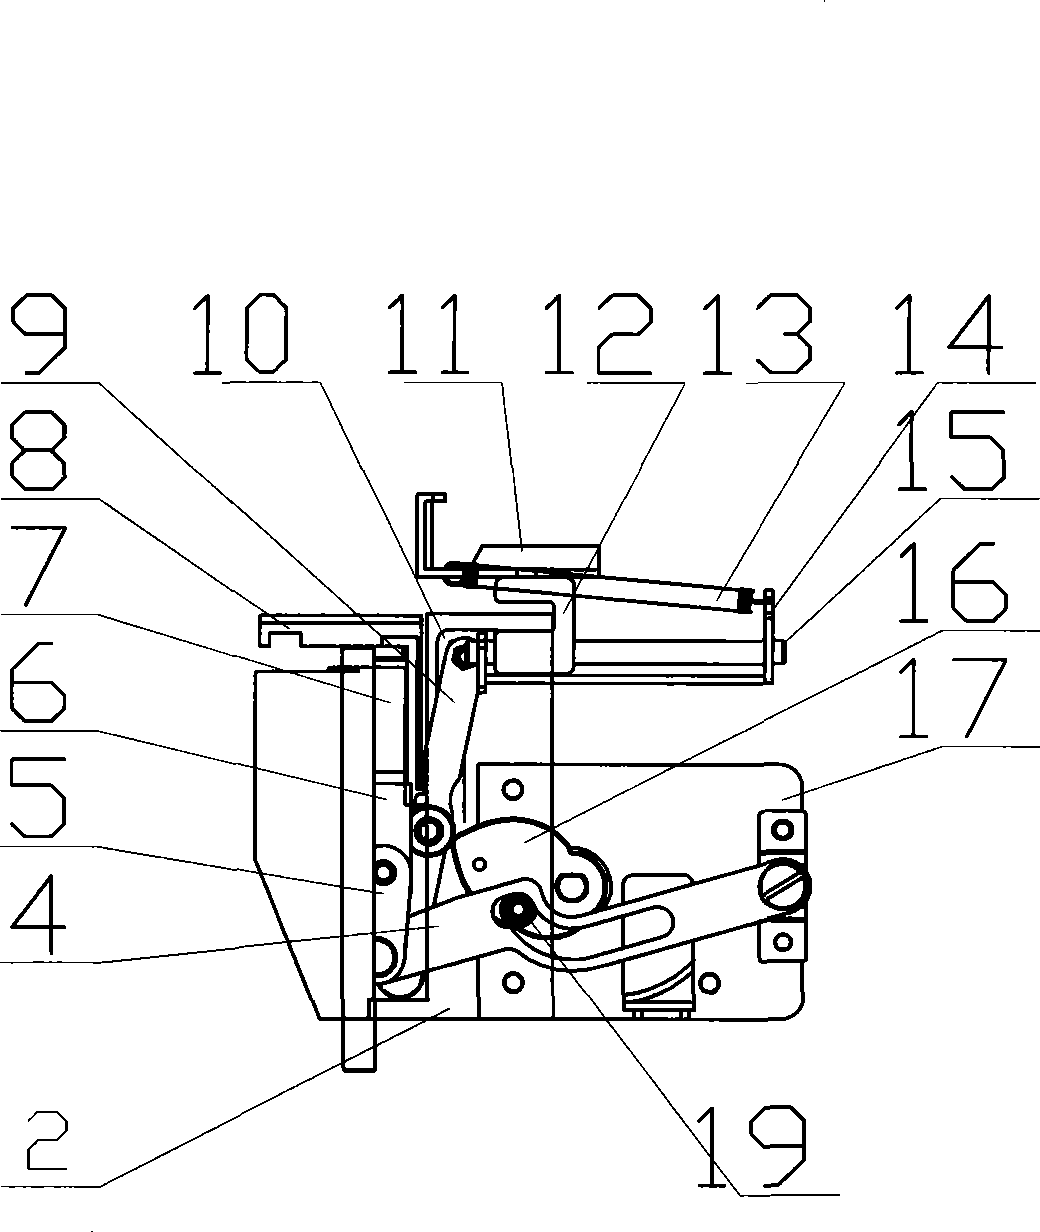 Flat-push card-preparing apparatus of automatic machine for mohjony game